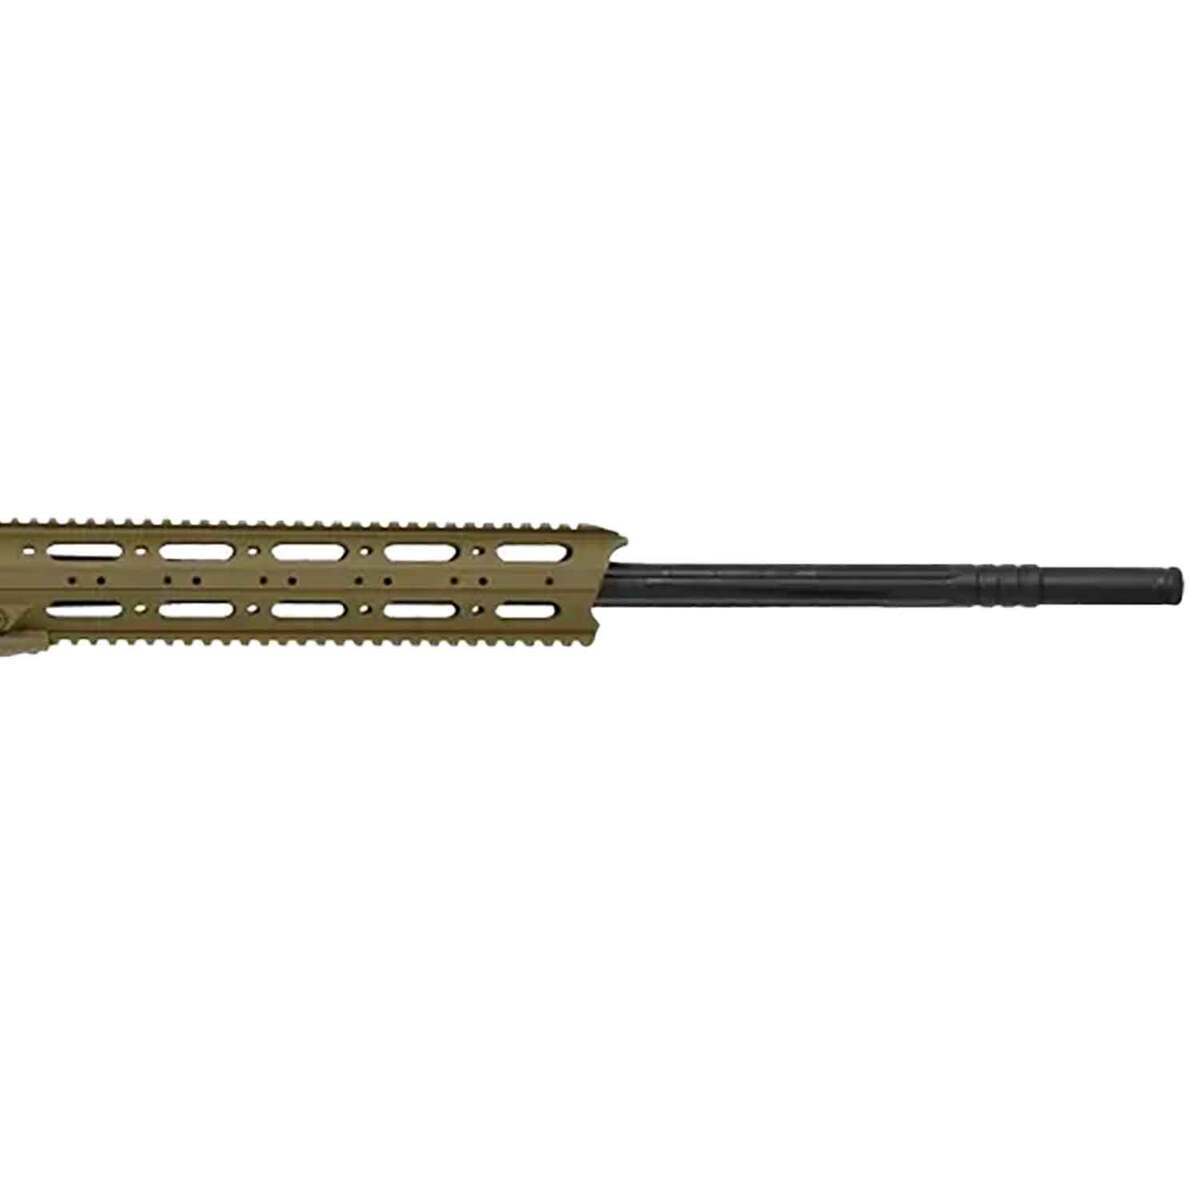 Sako TRG M10 Coyote Brown Cerakote Bolt Action Rifle - 338 Lapua Magnum ...